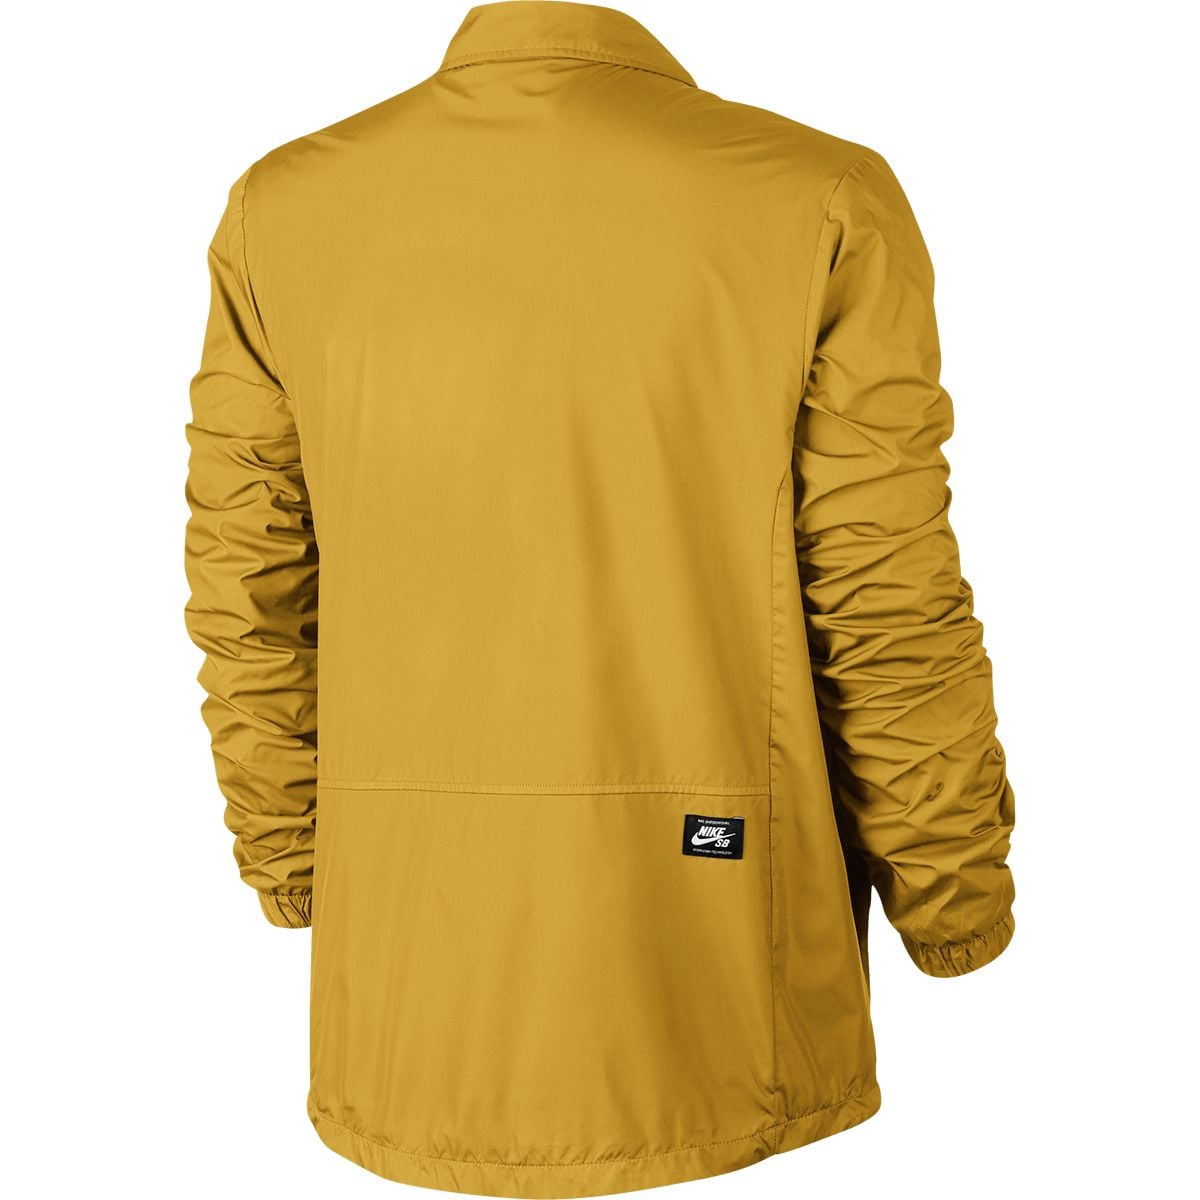 Nike SB Shield Jacket - Men's - Clothing